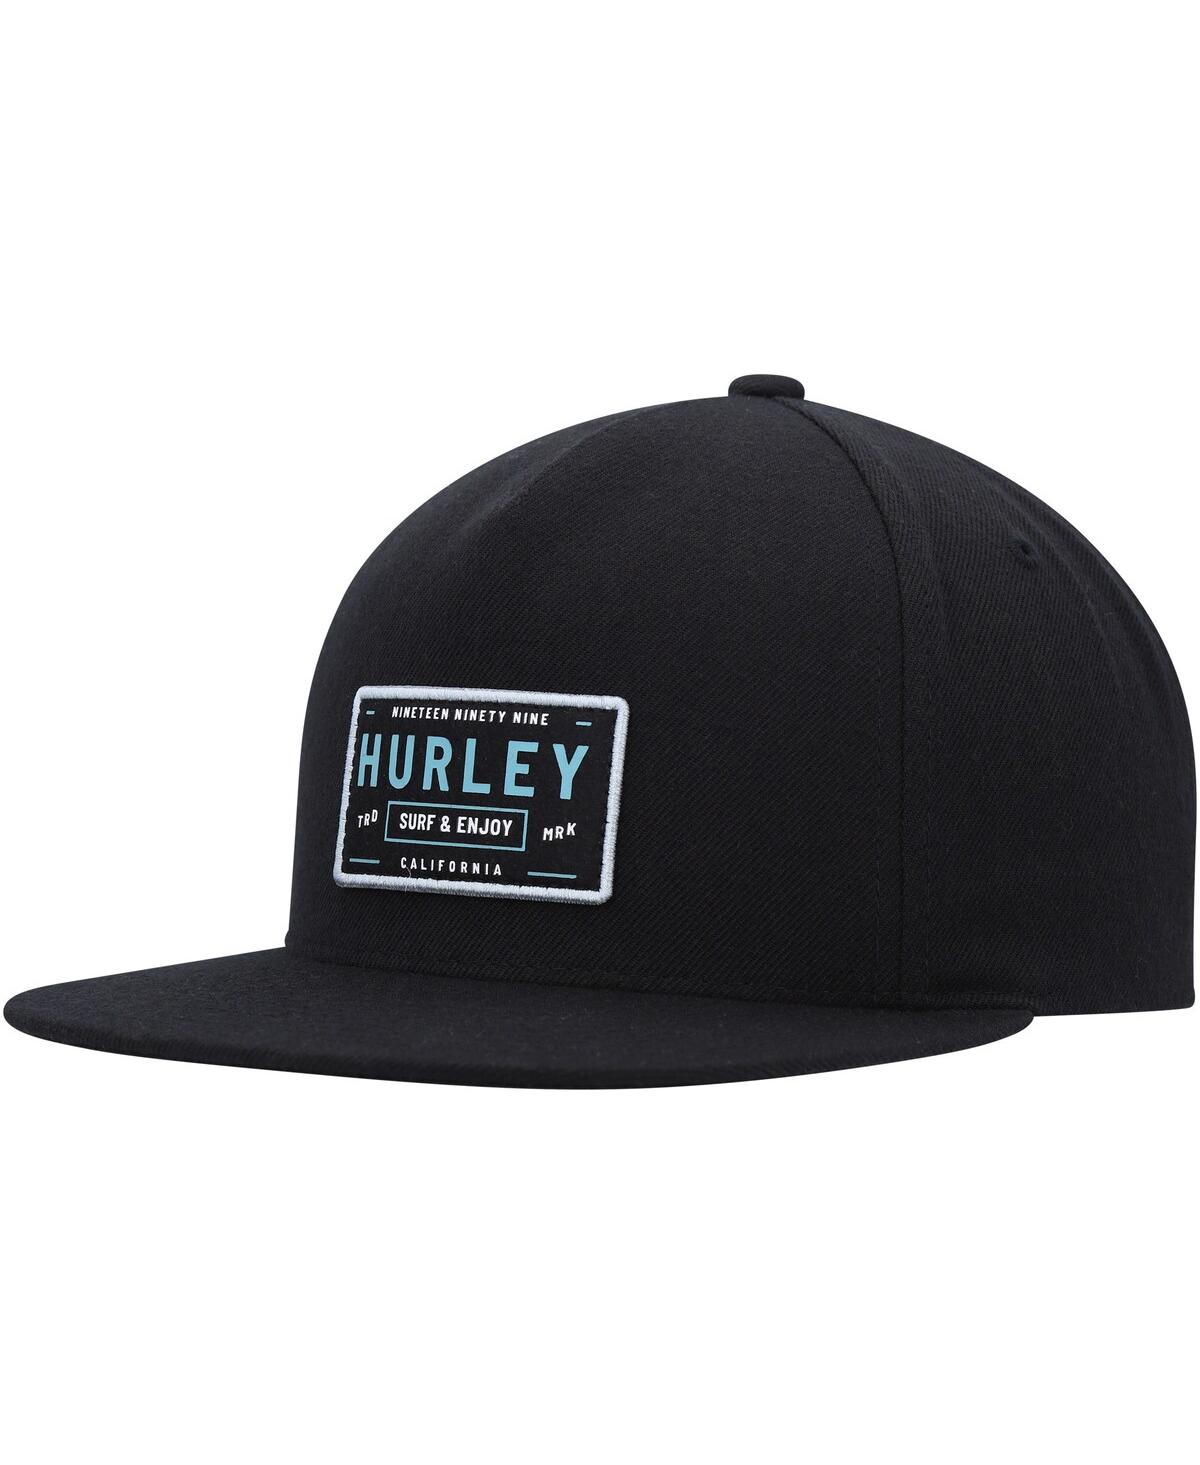 Men's Hurley Black Bixby Snapback Hat - Black